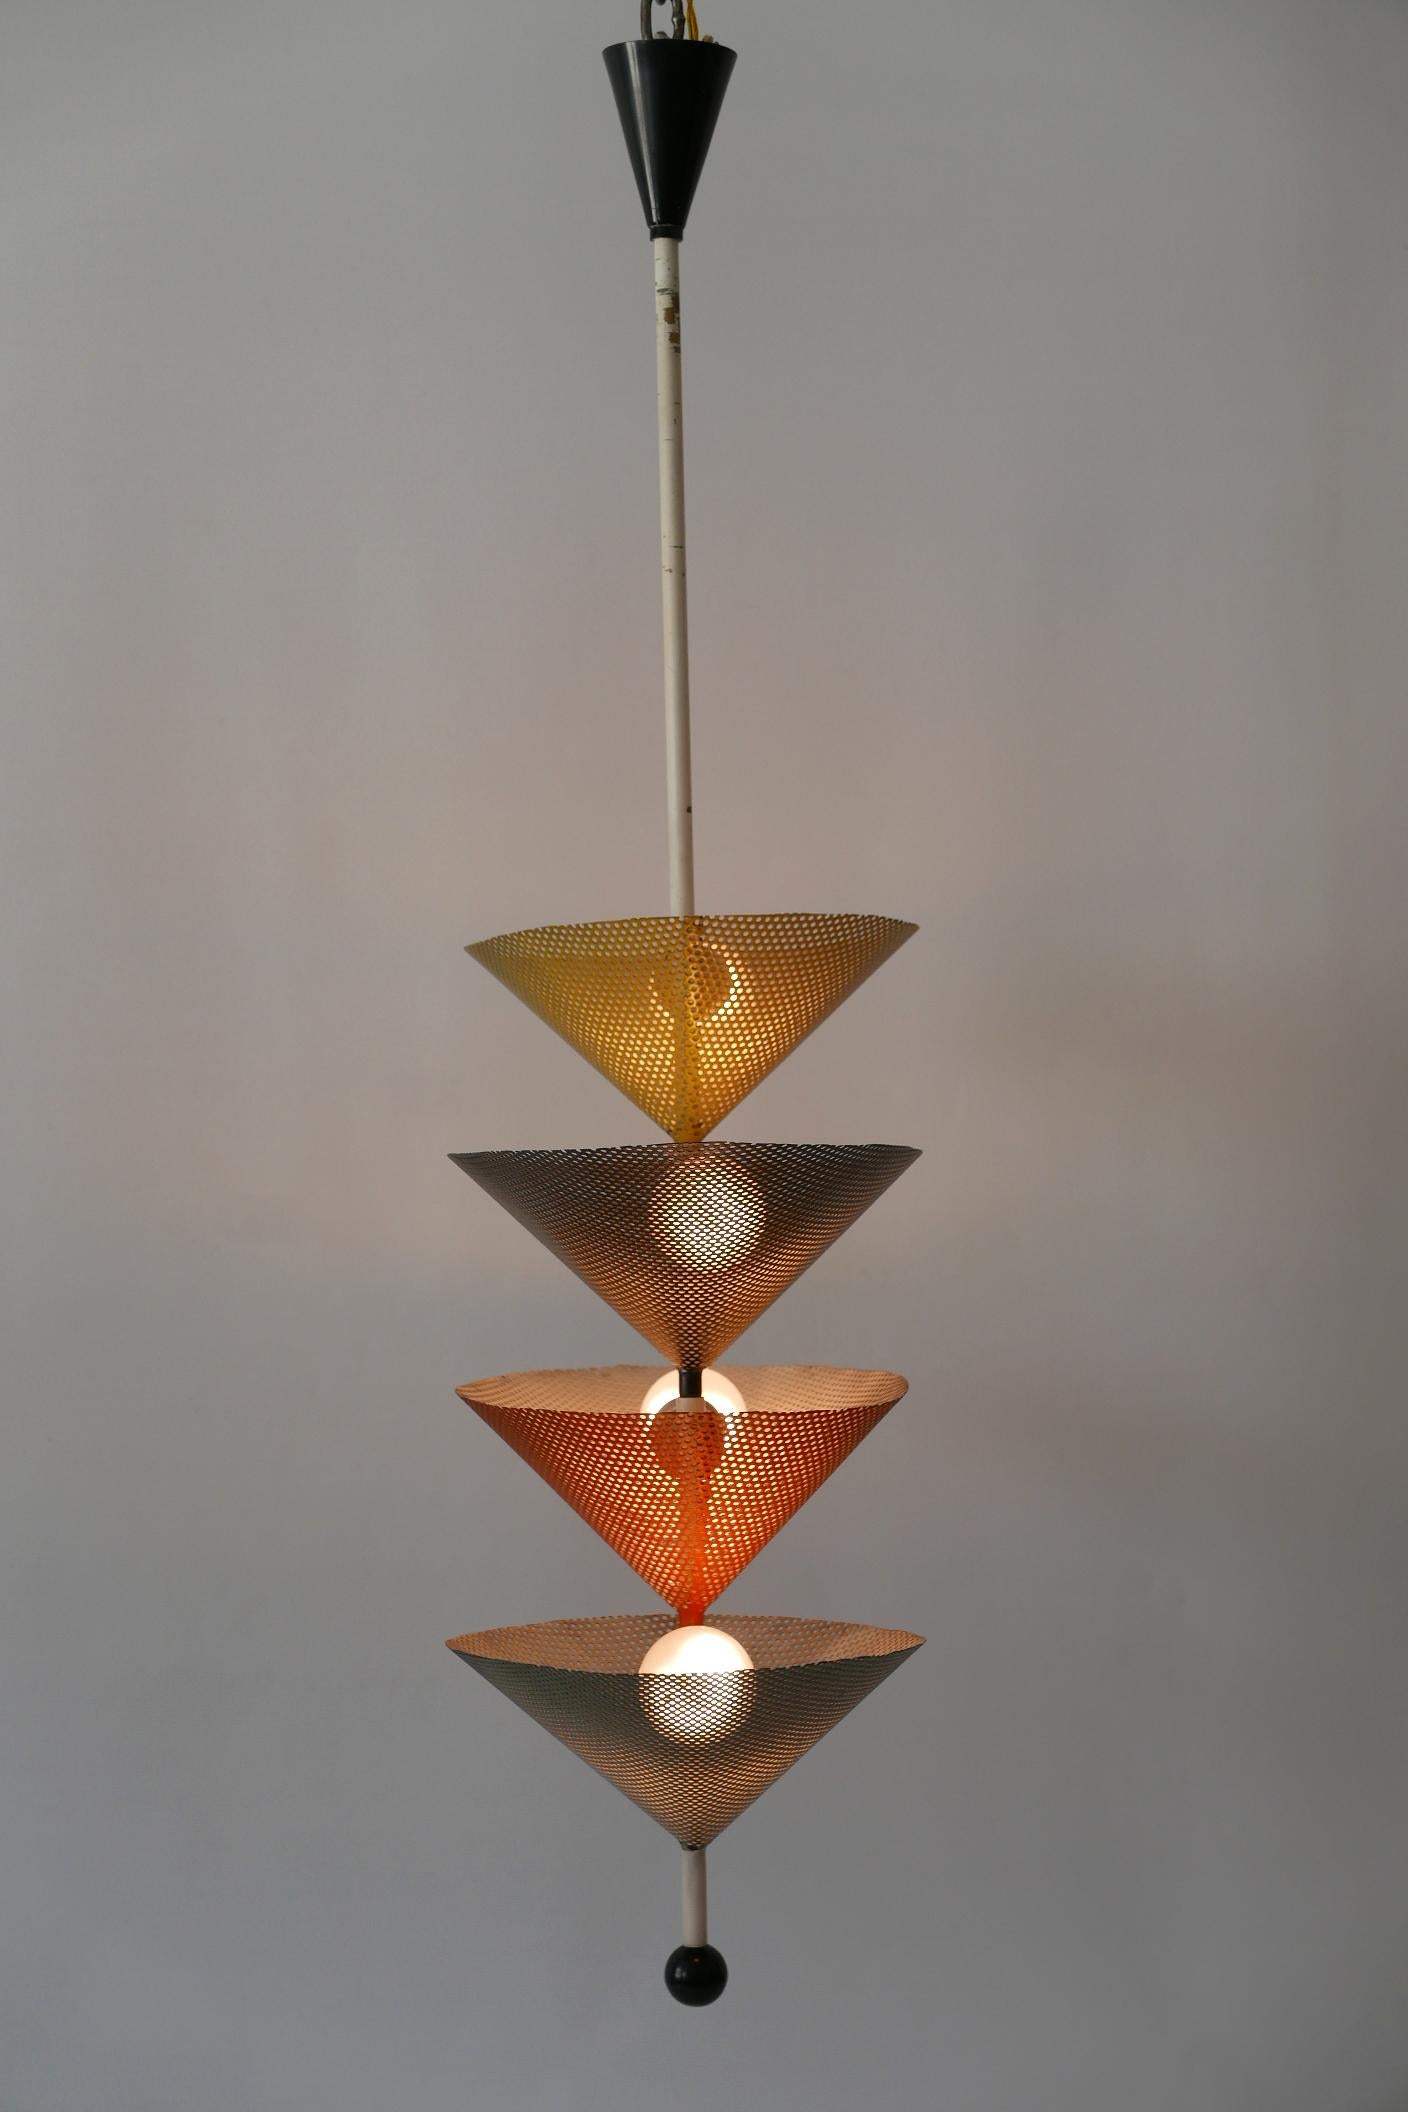 Rare Mid-Century Modern Chandelier or Pendant Lamp by Mathieu Matégot 1950s For Sale 5